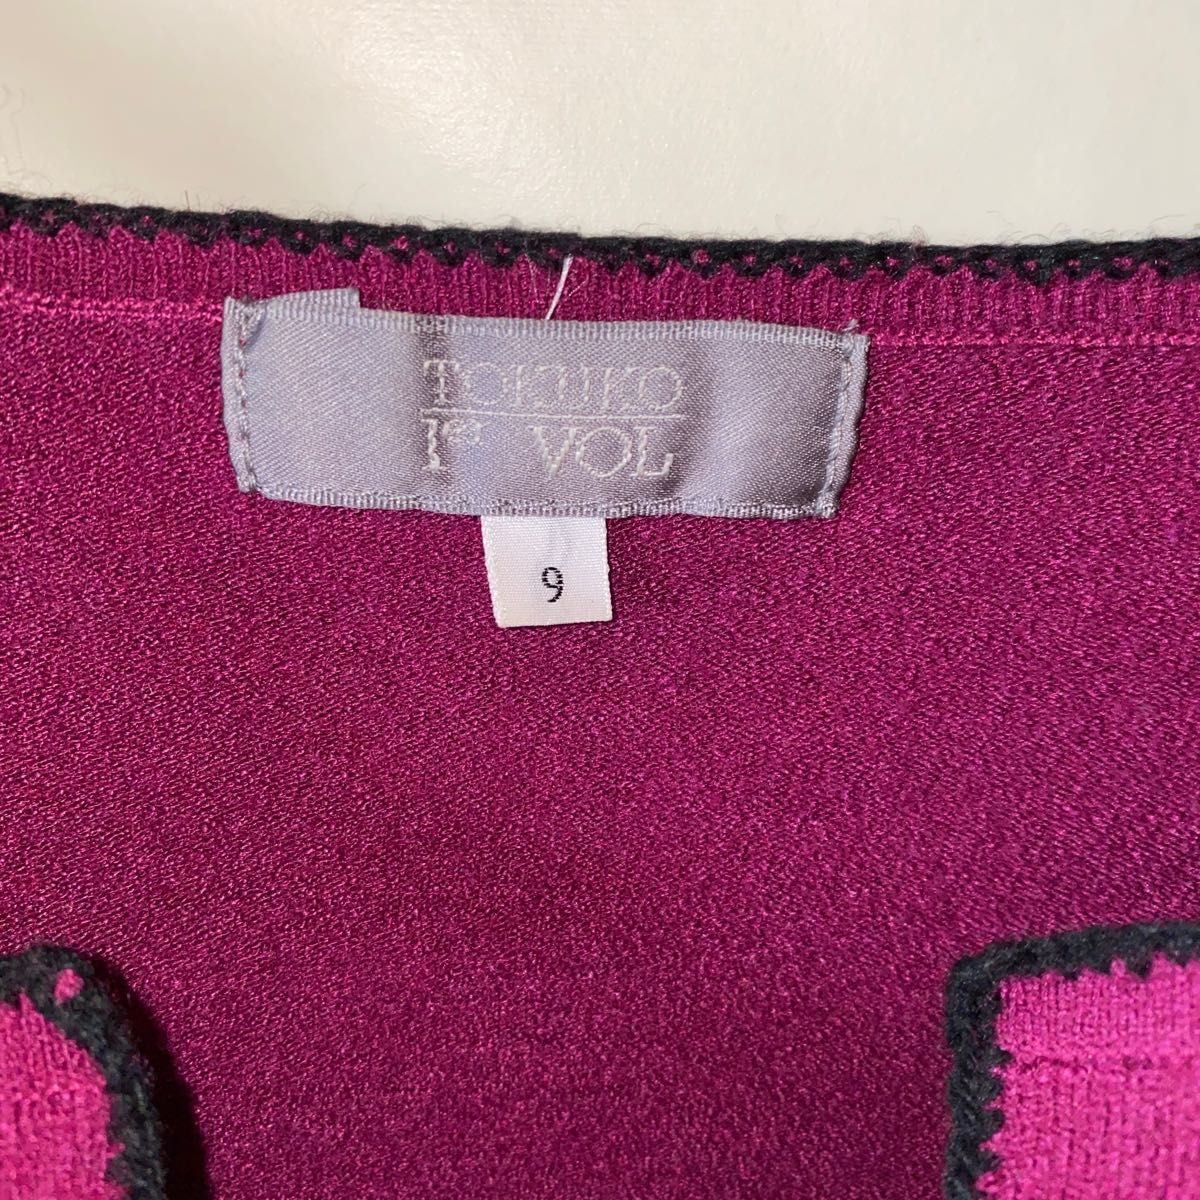 TOKUKO 1erVOL紫刺繍Vネックセーター